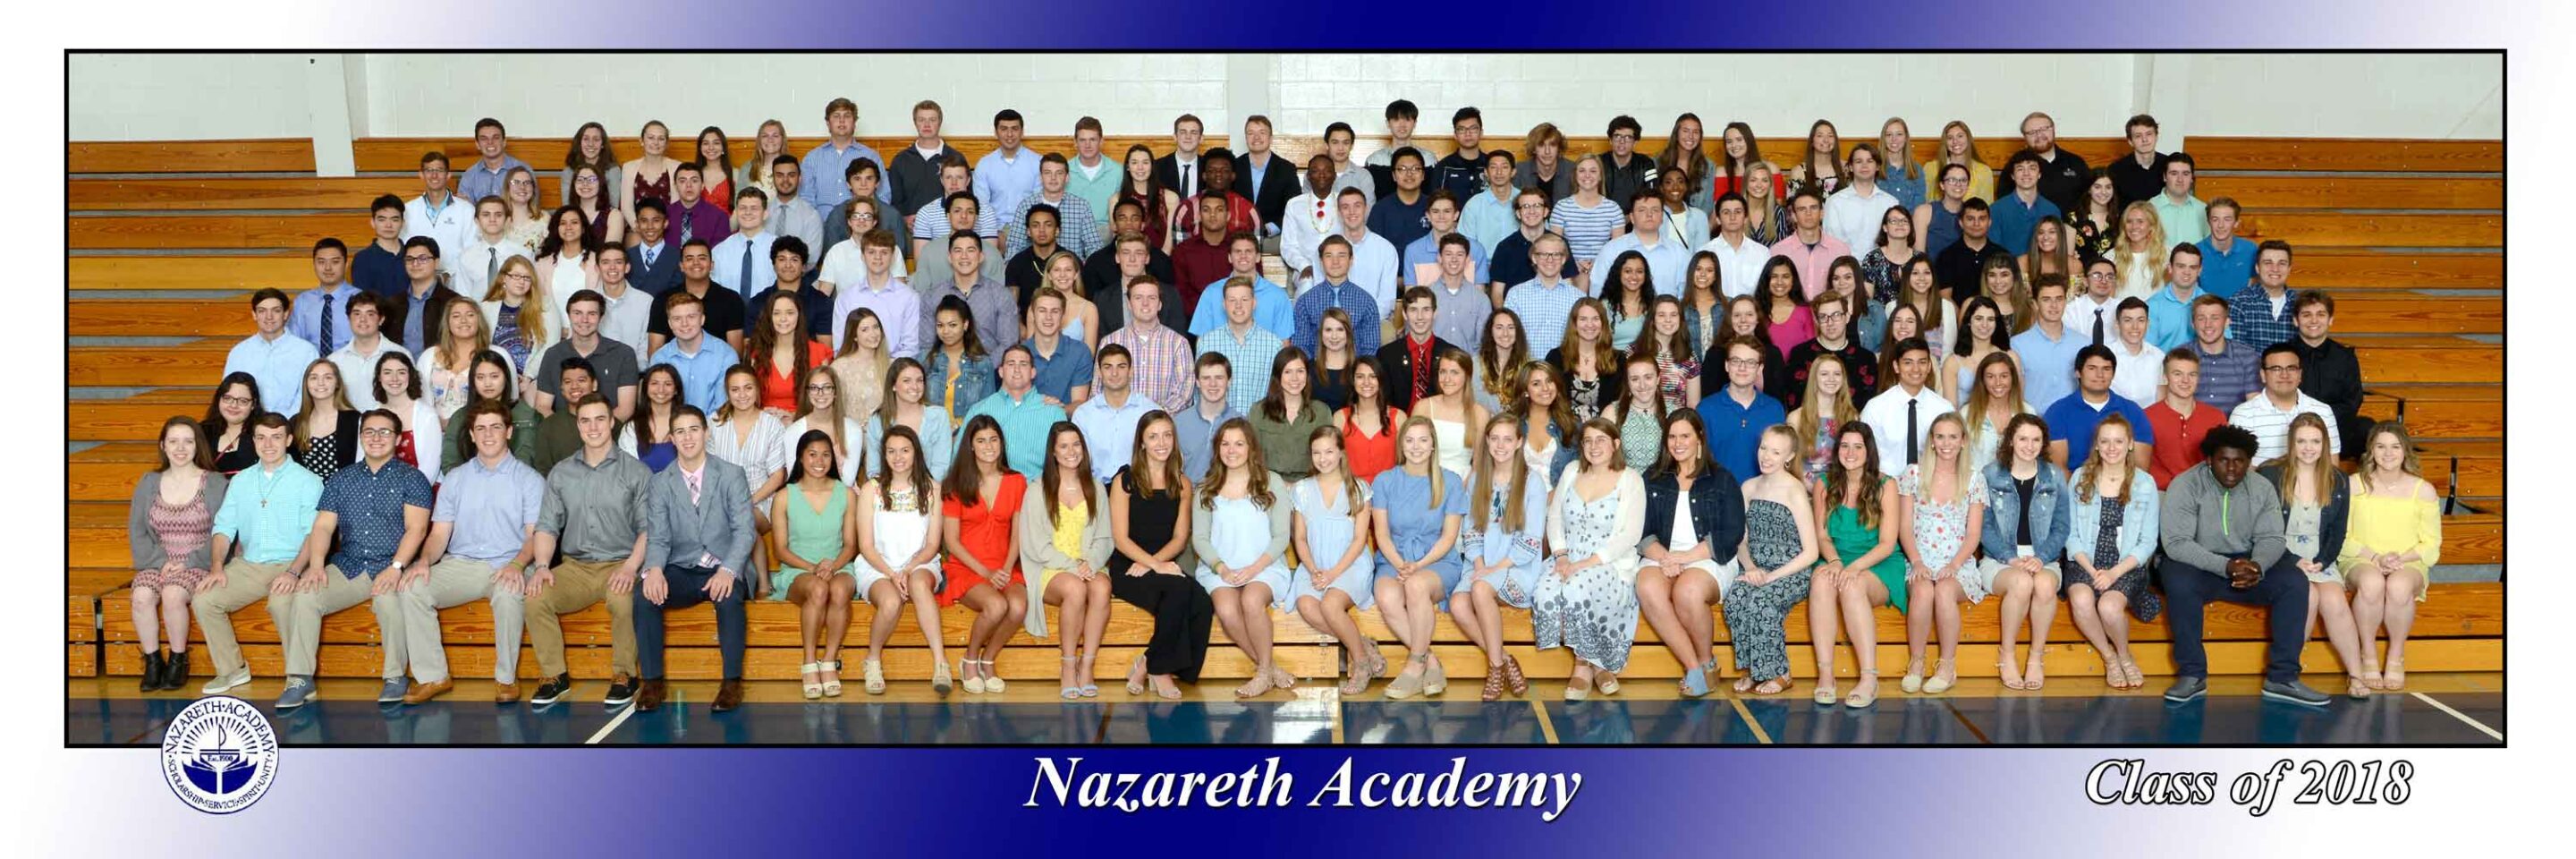 Nazareth Academy Panoramic Group Photo by Tom Killoran